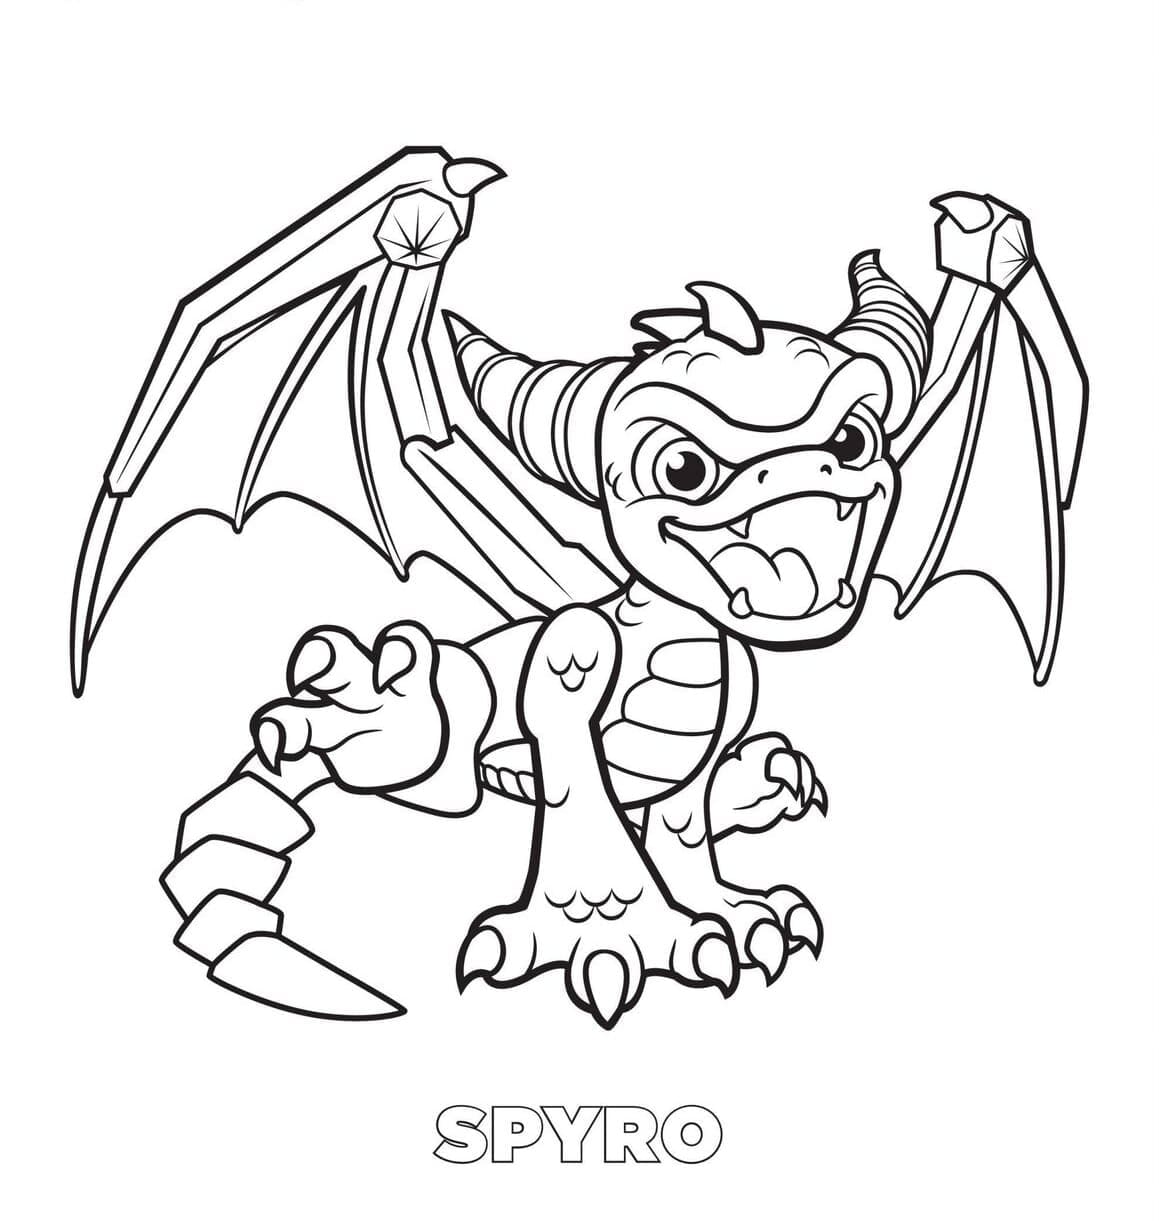 Petit Spyro coloring page